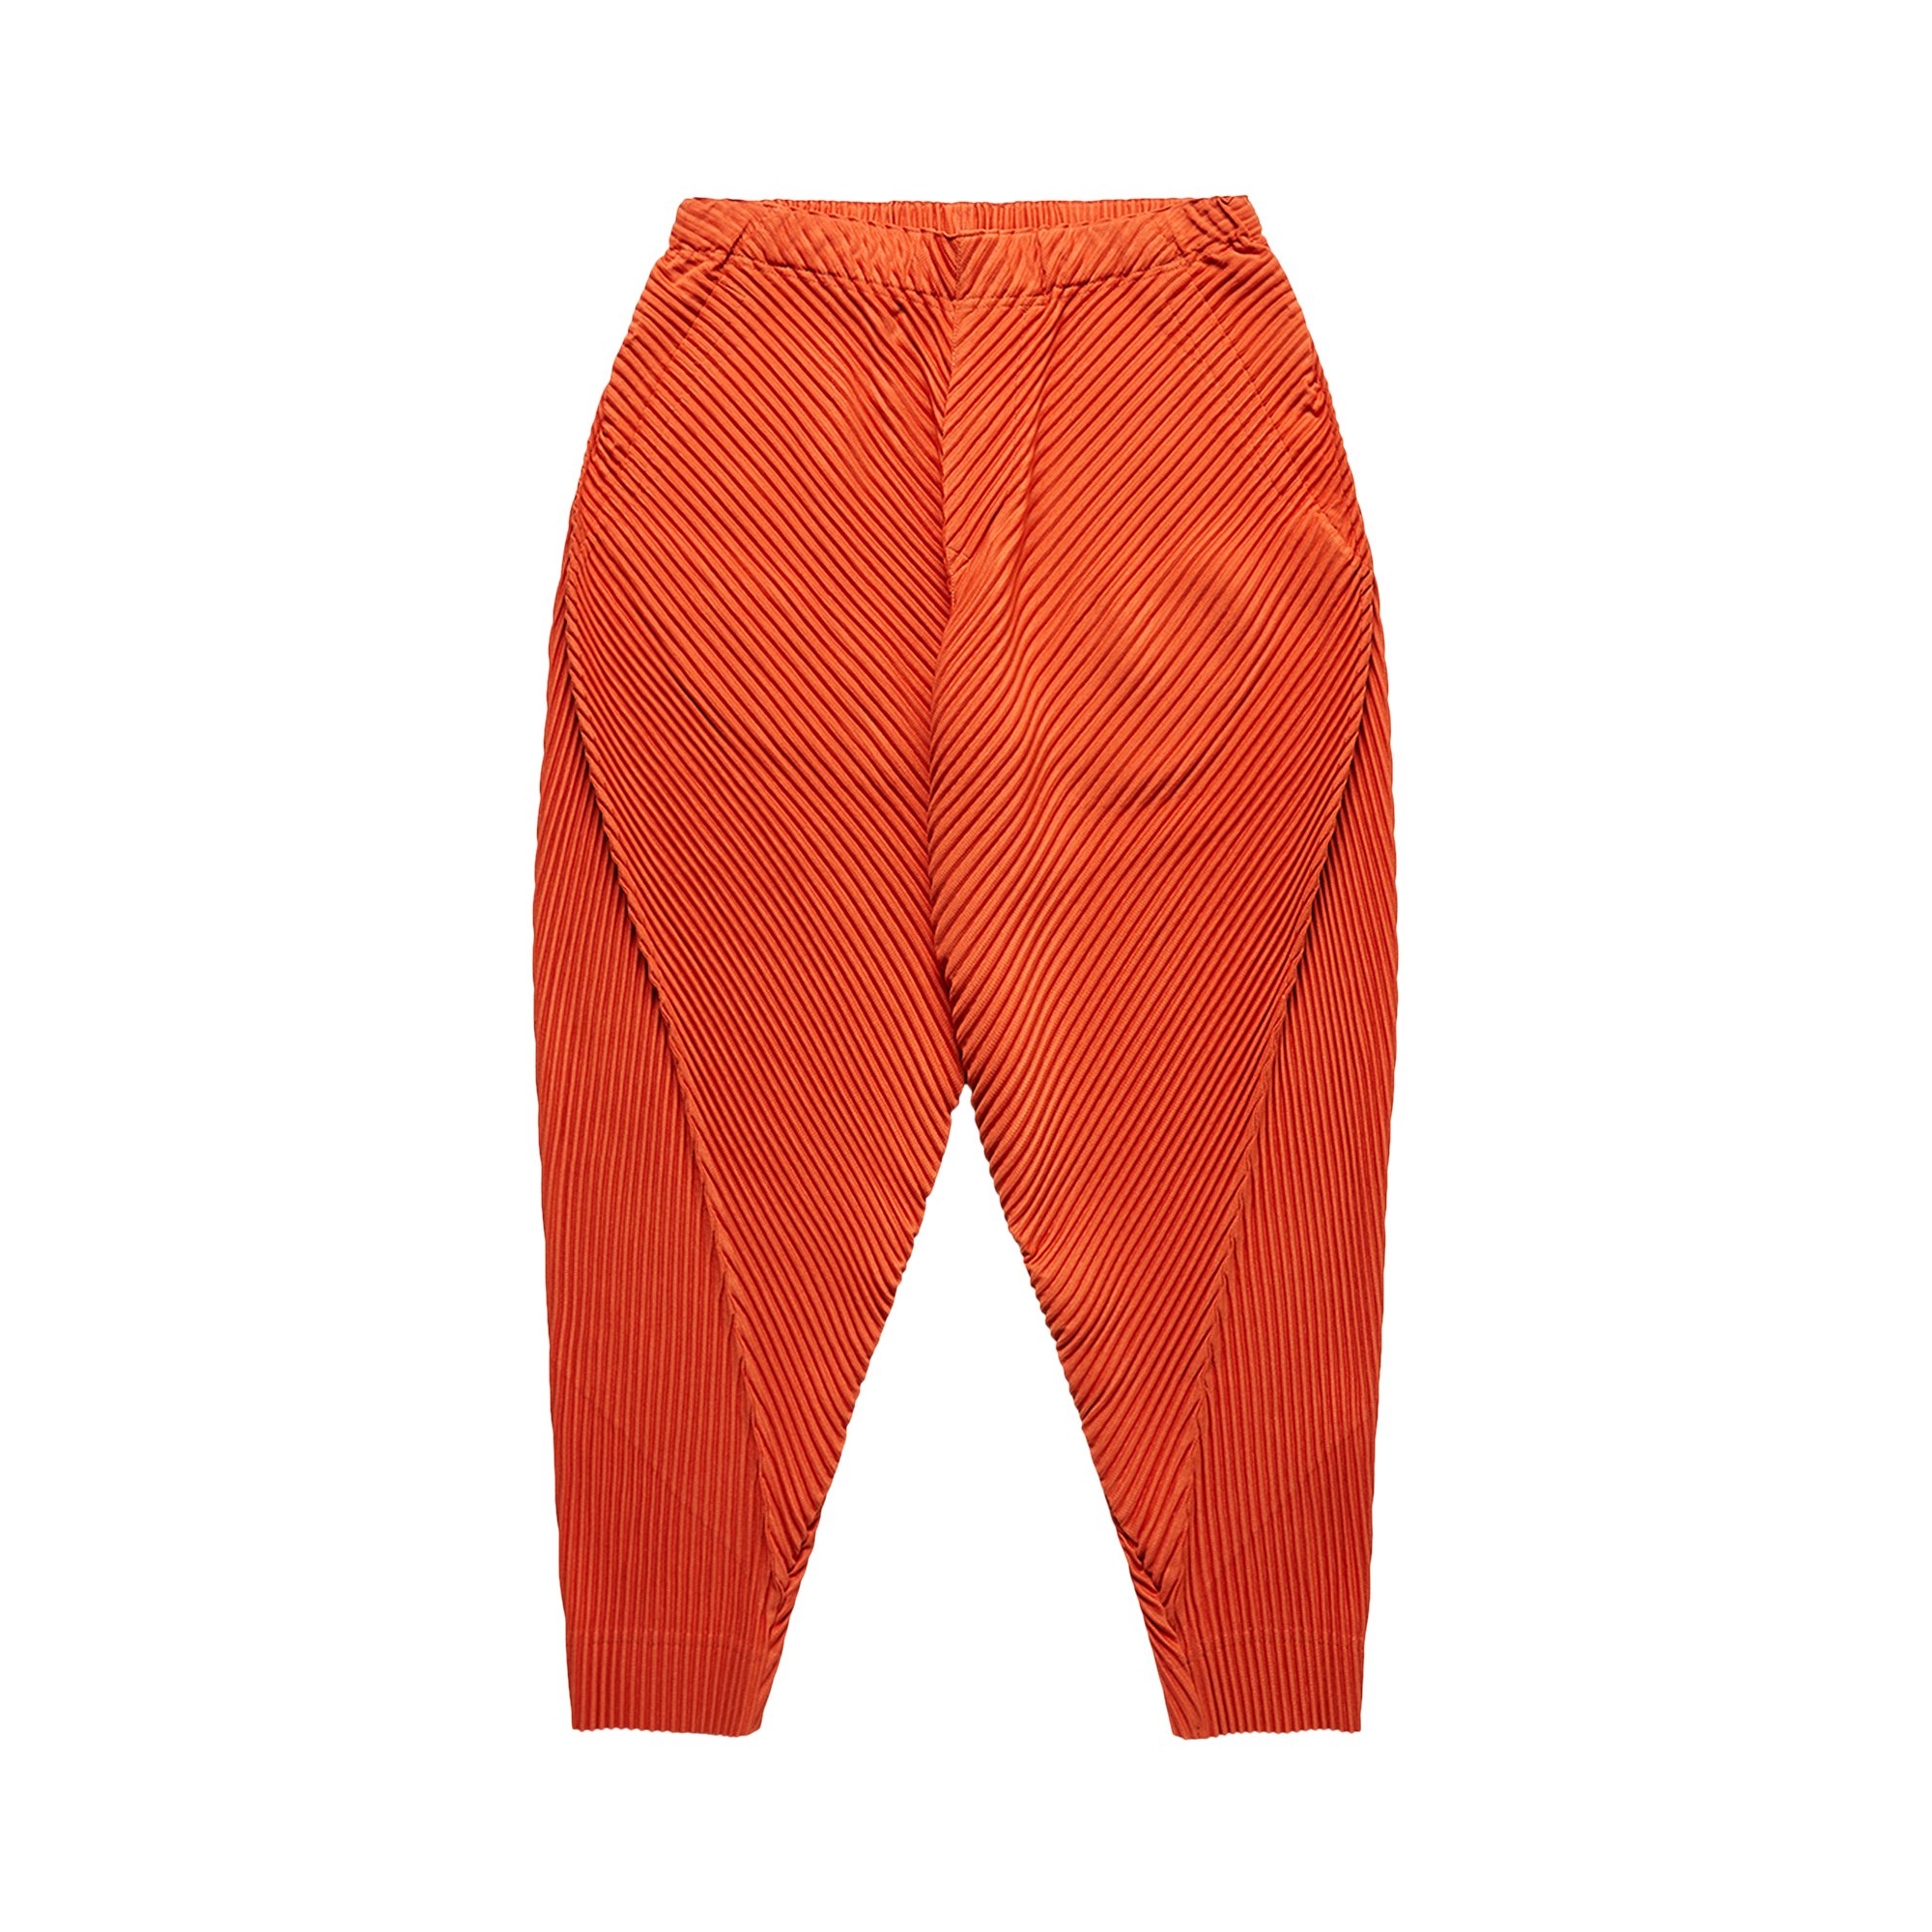 Buy Homme Plissé Issey Miyake Arc Pleated Pant 'Vermilion Orange 